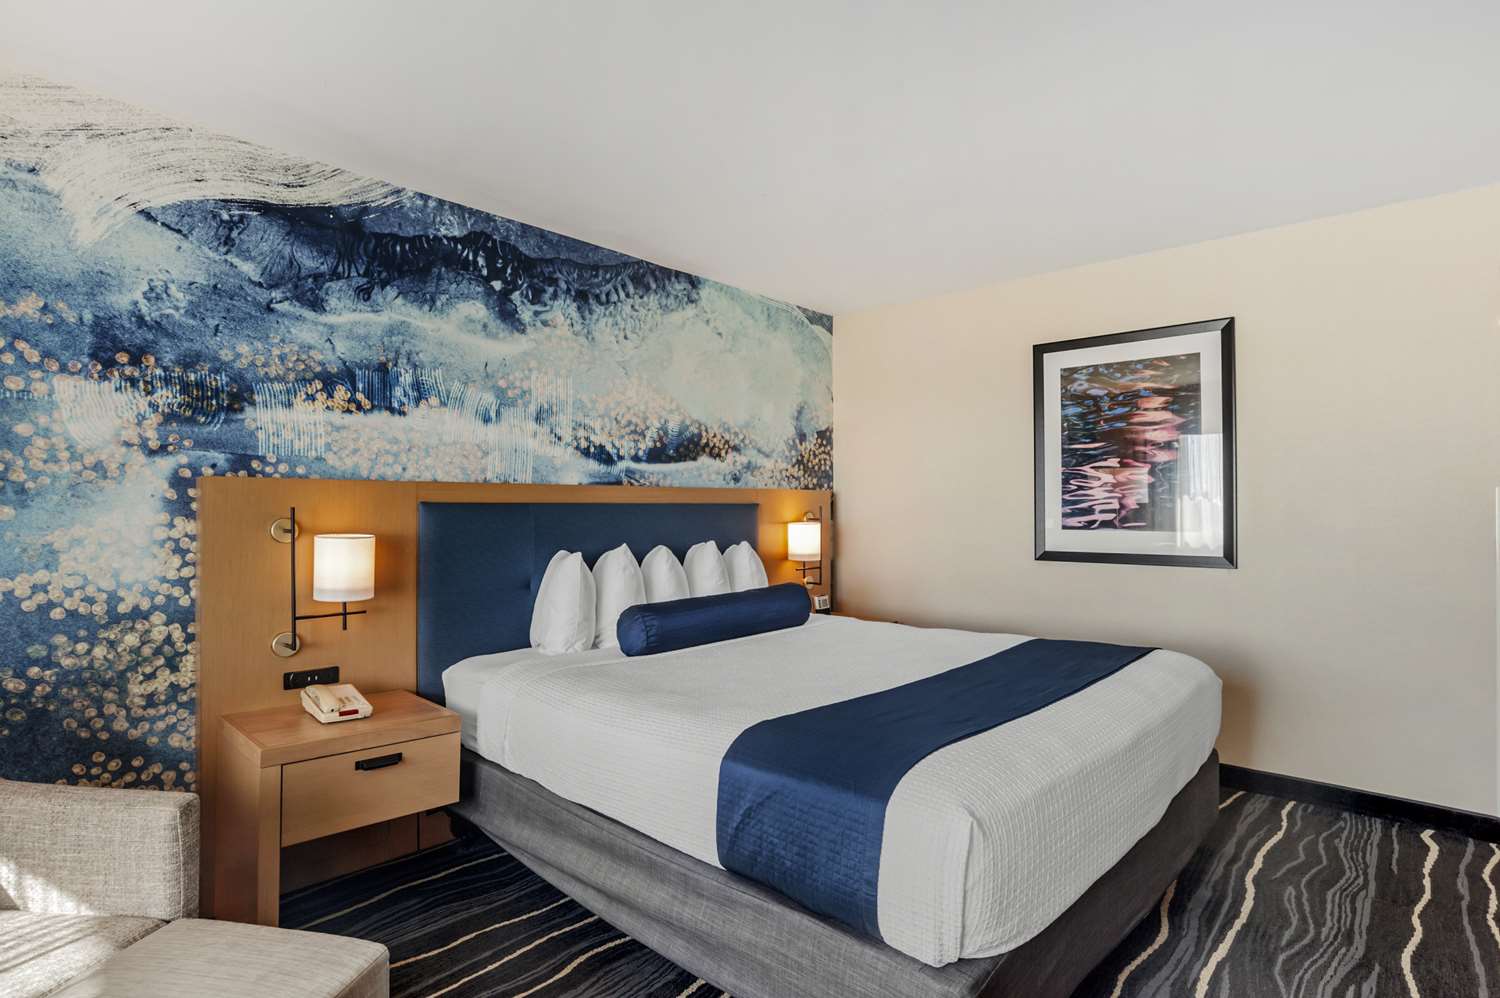 Buy Luxury Hotel Bedding from Marriott Hotels - Ice Ball Press